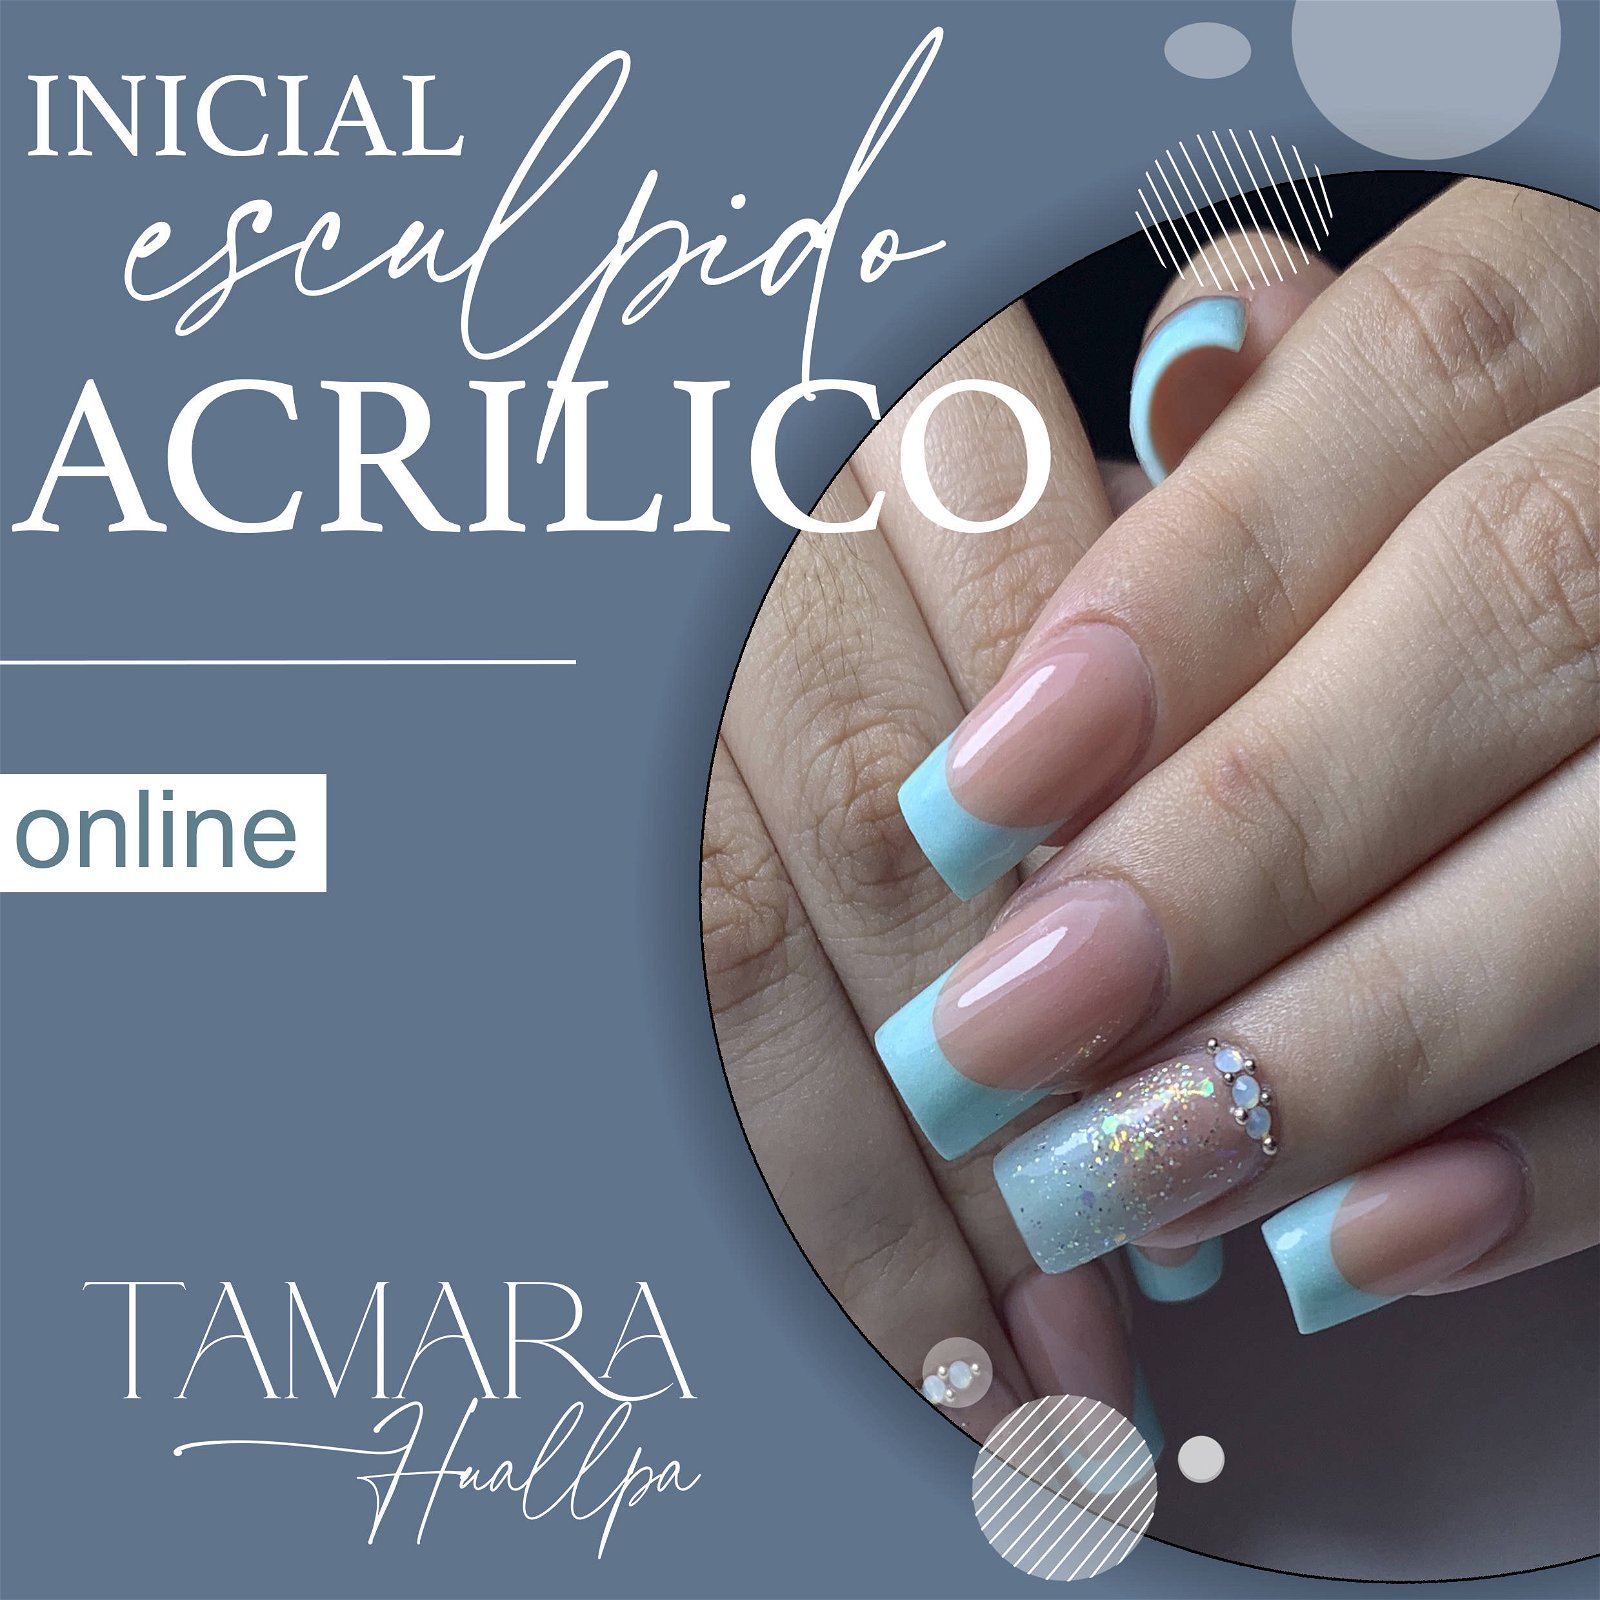 INICIAL Esculpidas ACRILICO - TH - Academia Online de Uñas